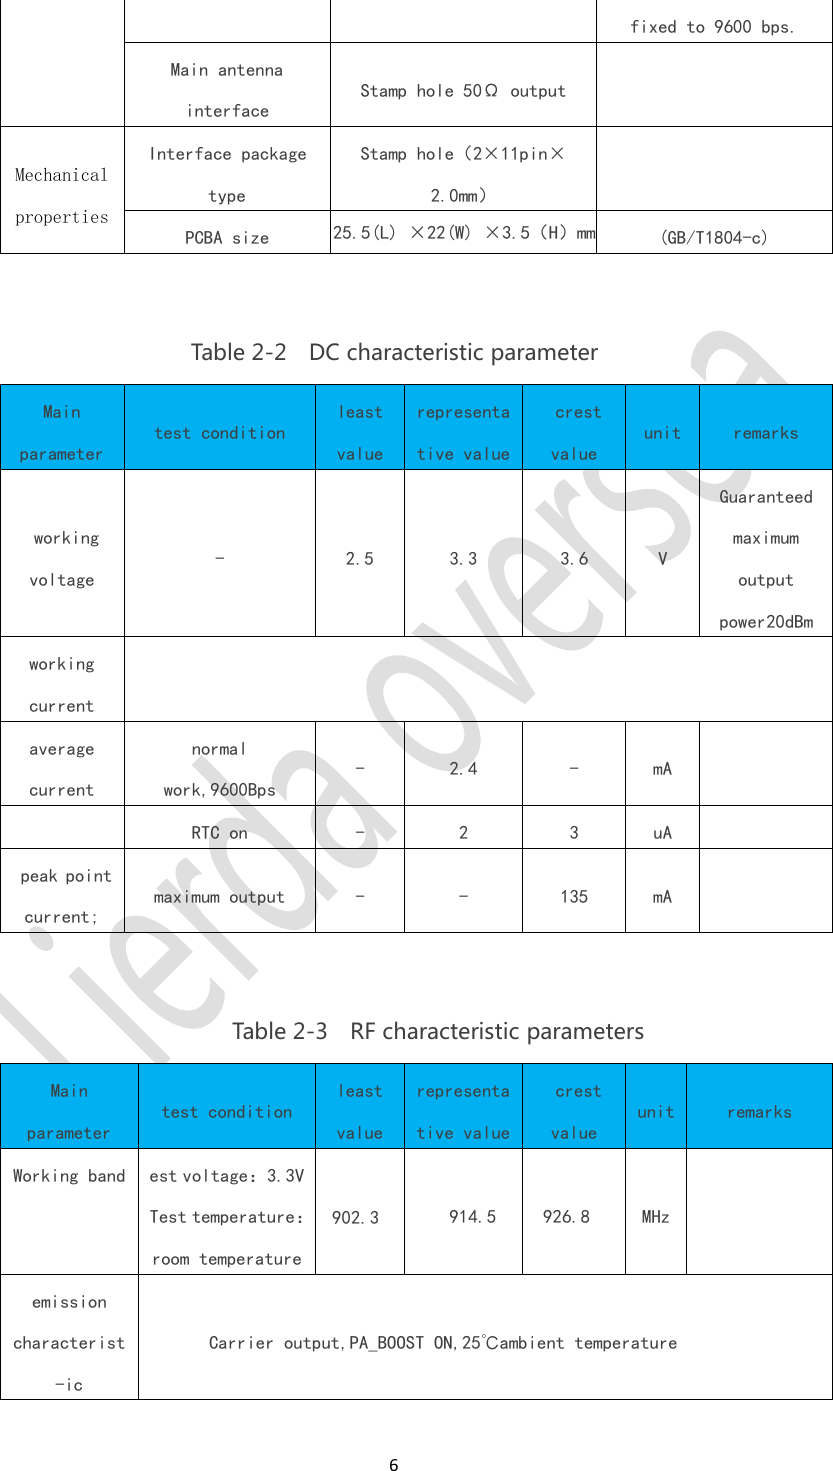 6fixed to 9600 bps.Main antennainterfaceStamp hole 50Ω outputMechanicalpropertiesInterface packagetypeStamp hole（2×11pin×2.0mm）PCBA size25.5(L) ×22(W) ×3.5（H）mm(GB/T1804-c)Table 2-2 DC characteristic parameterMainparametertest conditionleastvaluerepresentative valuecrestvalueunitremarksworkingvoltage-2.53.33.6VGuaranteedmaximumoutputpower20dBmworkingcurrentaveragecurrentnormalwork,9600Bps-2.4-mARTC on-23uApeak pointcurrent;maximum output--135mATable 2-3 RF characteristic parametersMainparametertest conditionleastvaluerepresentative valuecrestvalueunitremarksWorking bandest voltage：3.3VTest temperature：room temperature902.3 914.5 926.8MHzemissioncharacterist-icCarrier output,PA_BOOST ON,25℃ambient temperature